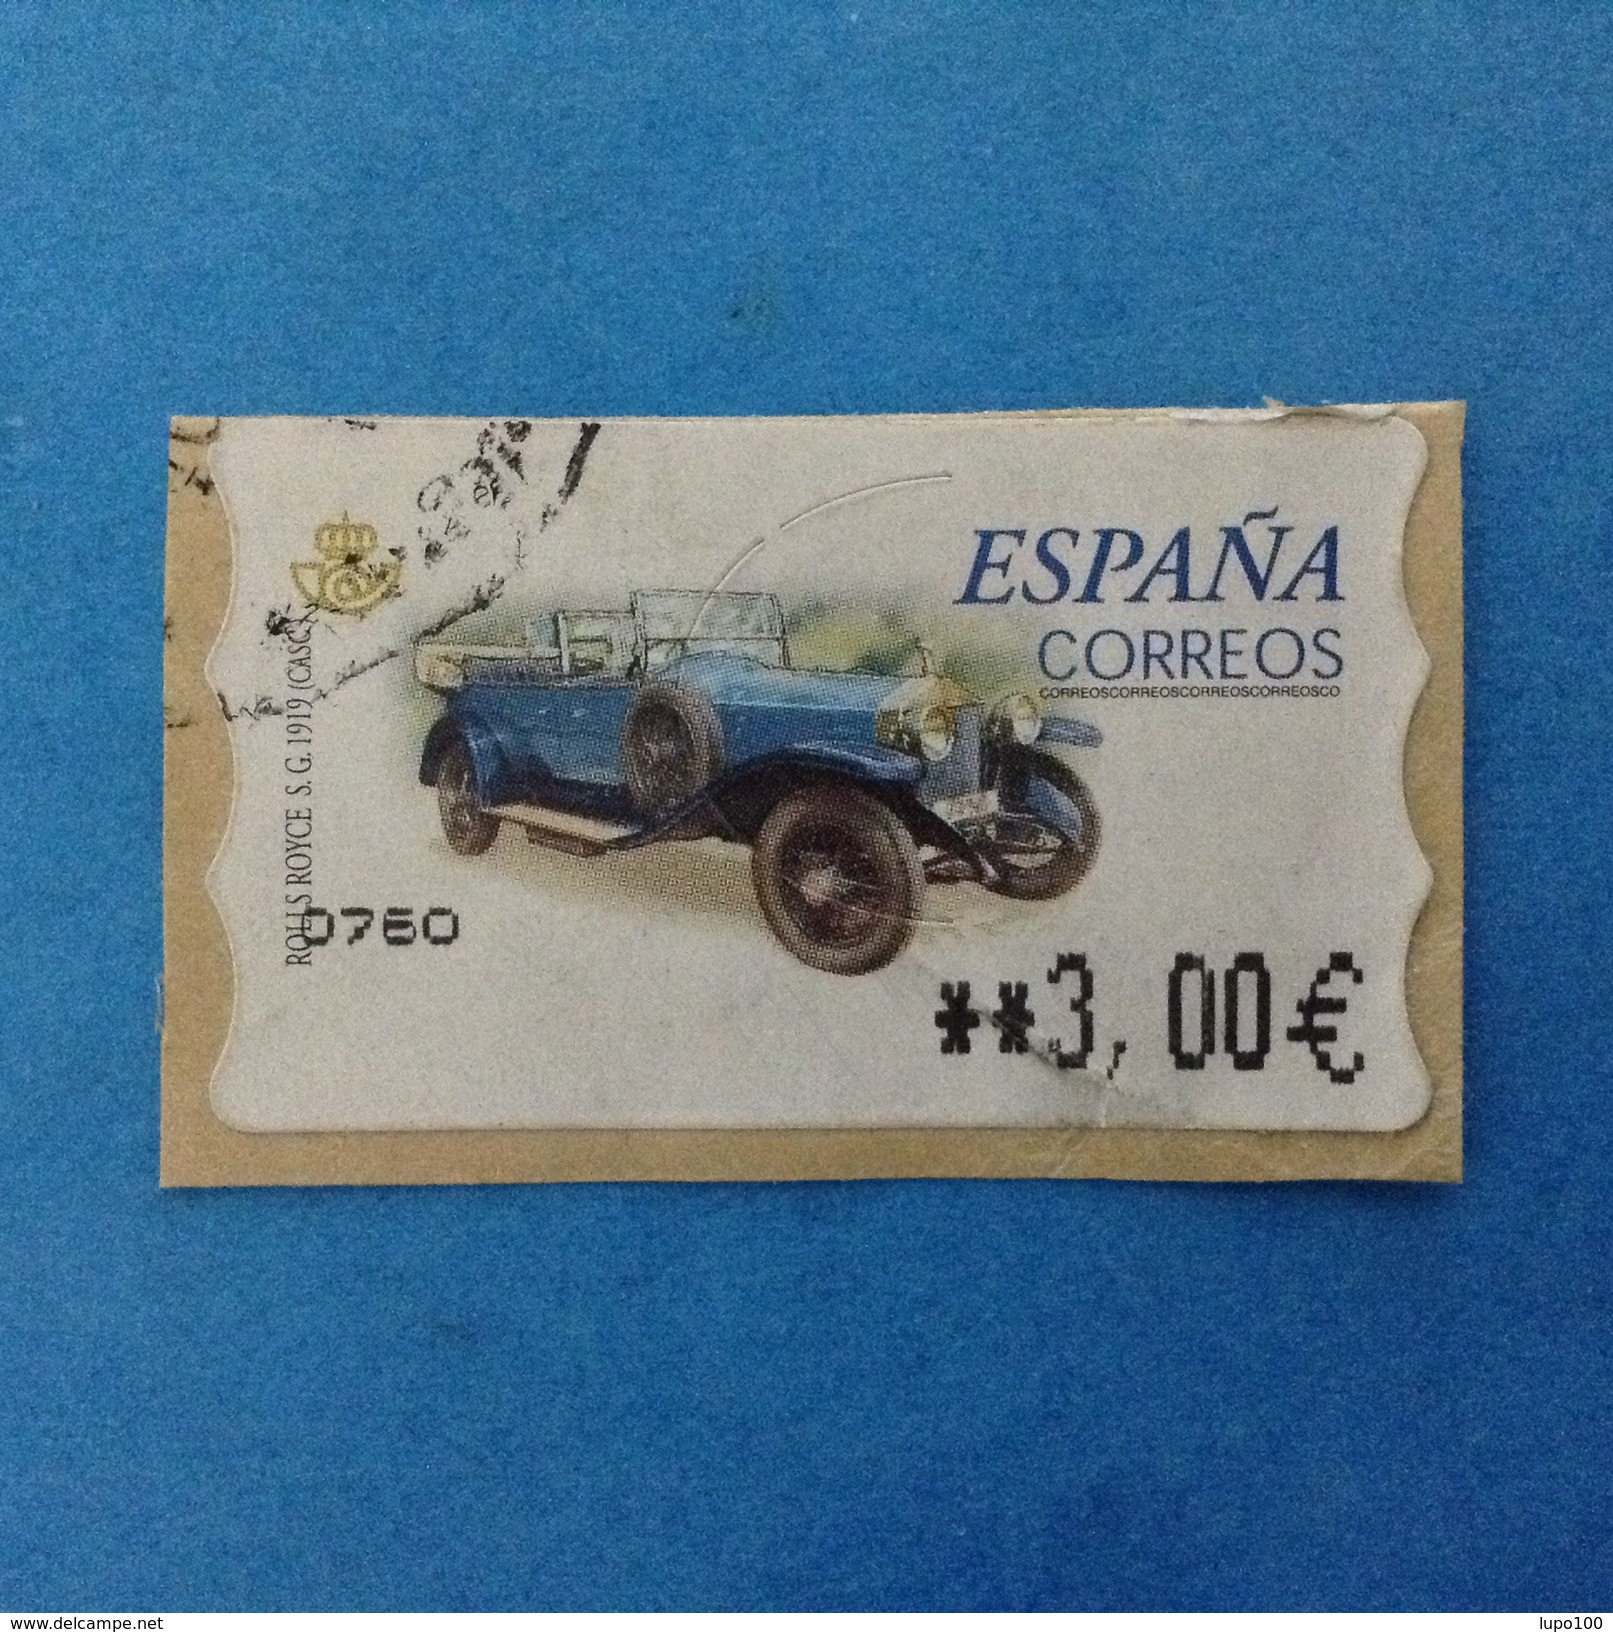 SPAGNA ESPANA FRANCOBOLLO USATO STAMP USED AUTOMATICO FRAMA ATM AUTO ROLLS ROYCE SG 1919 - Servizi